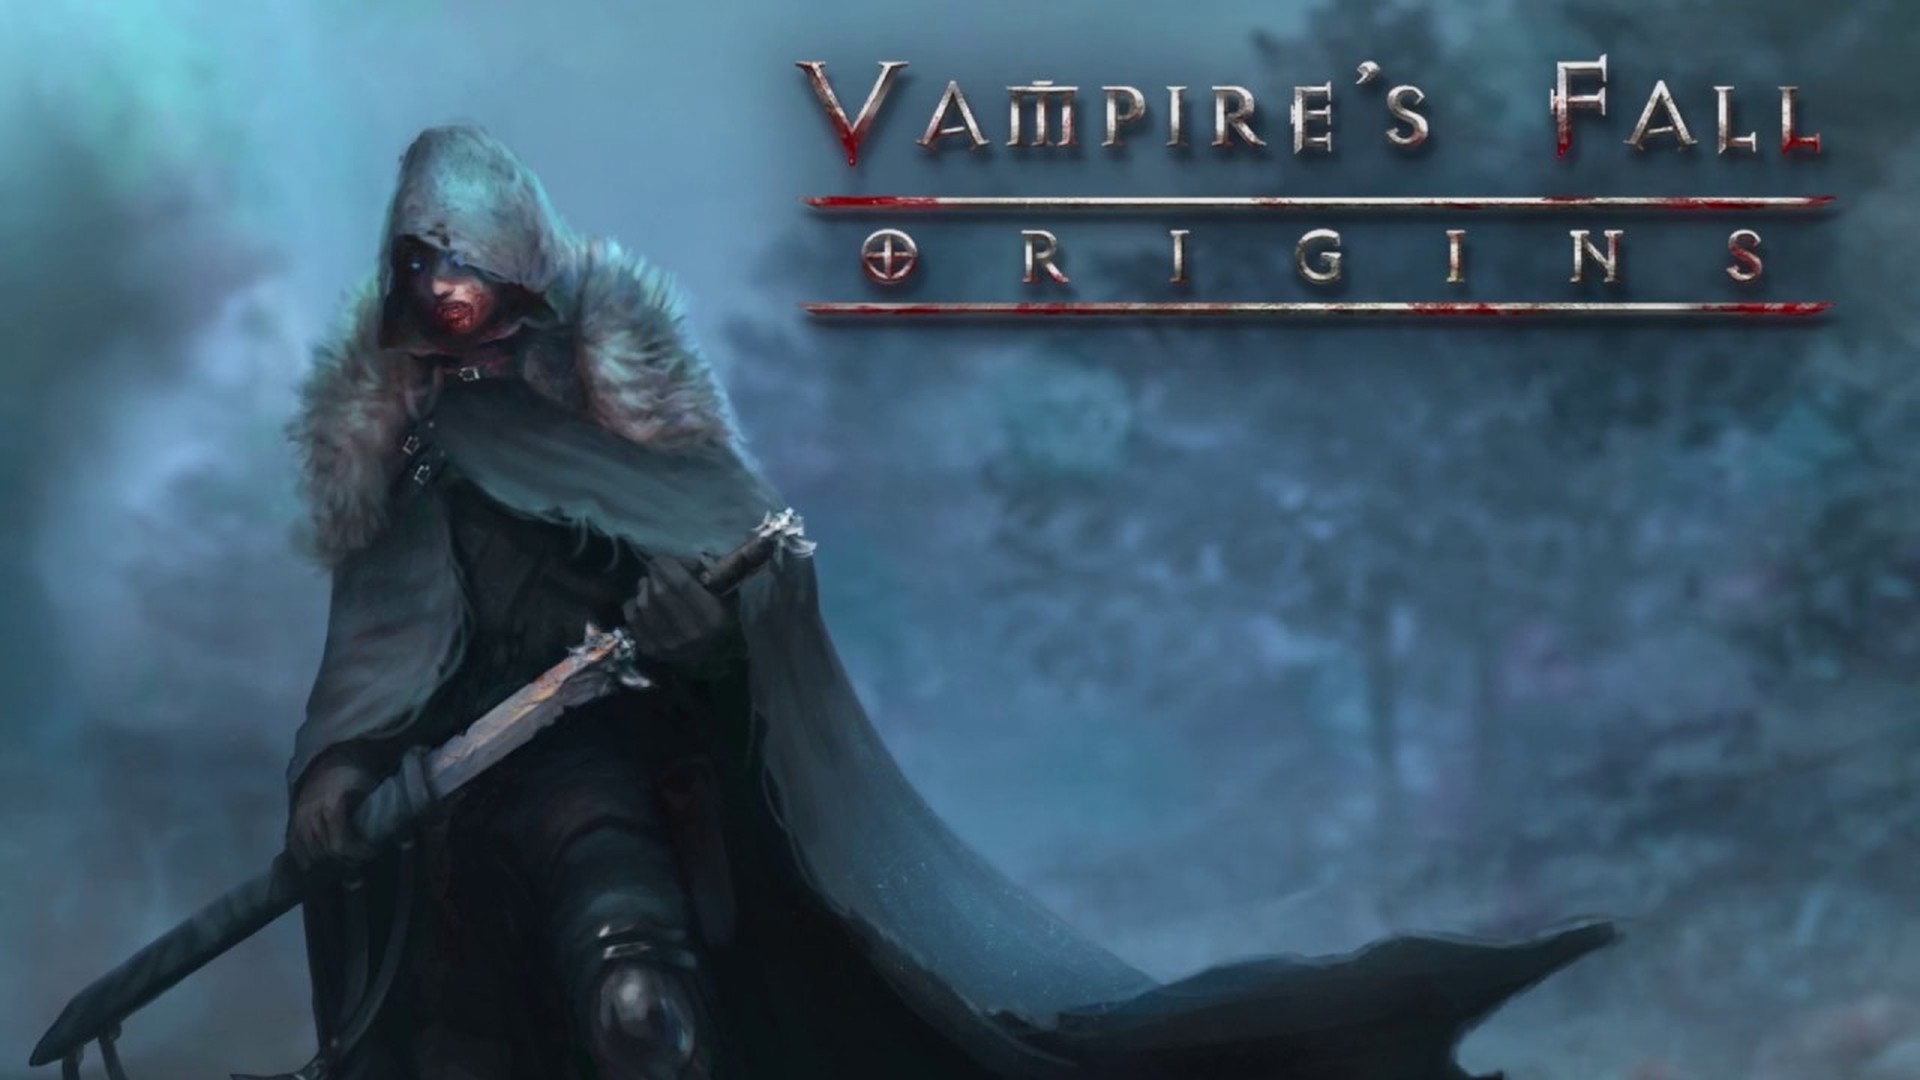 Vampire’s Fall: Origins – September 17